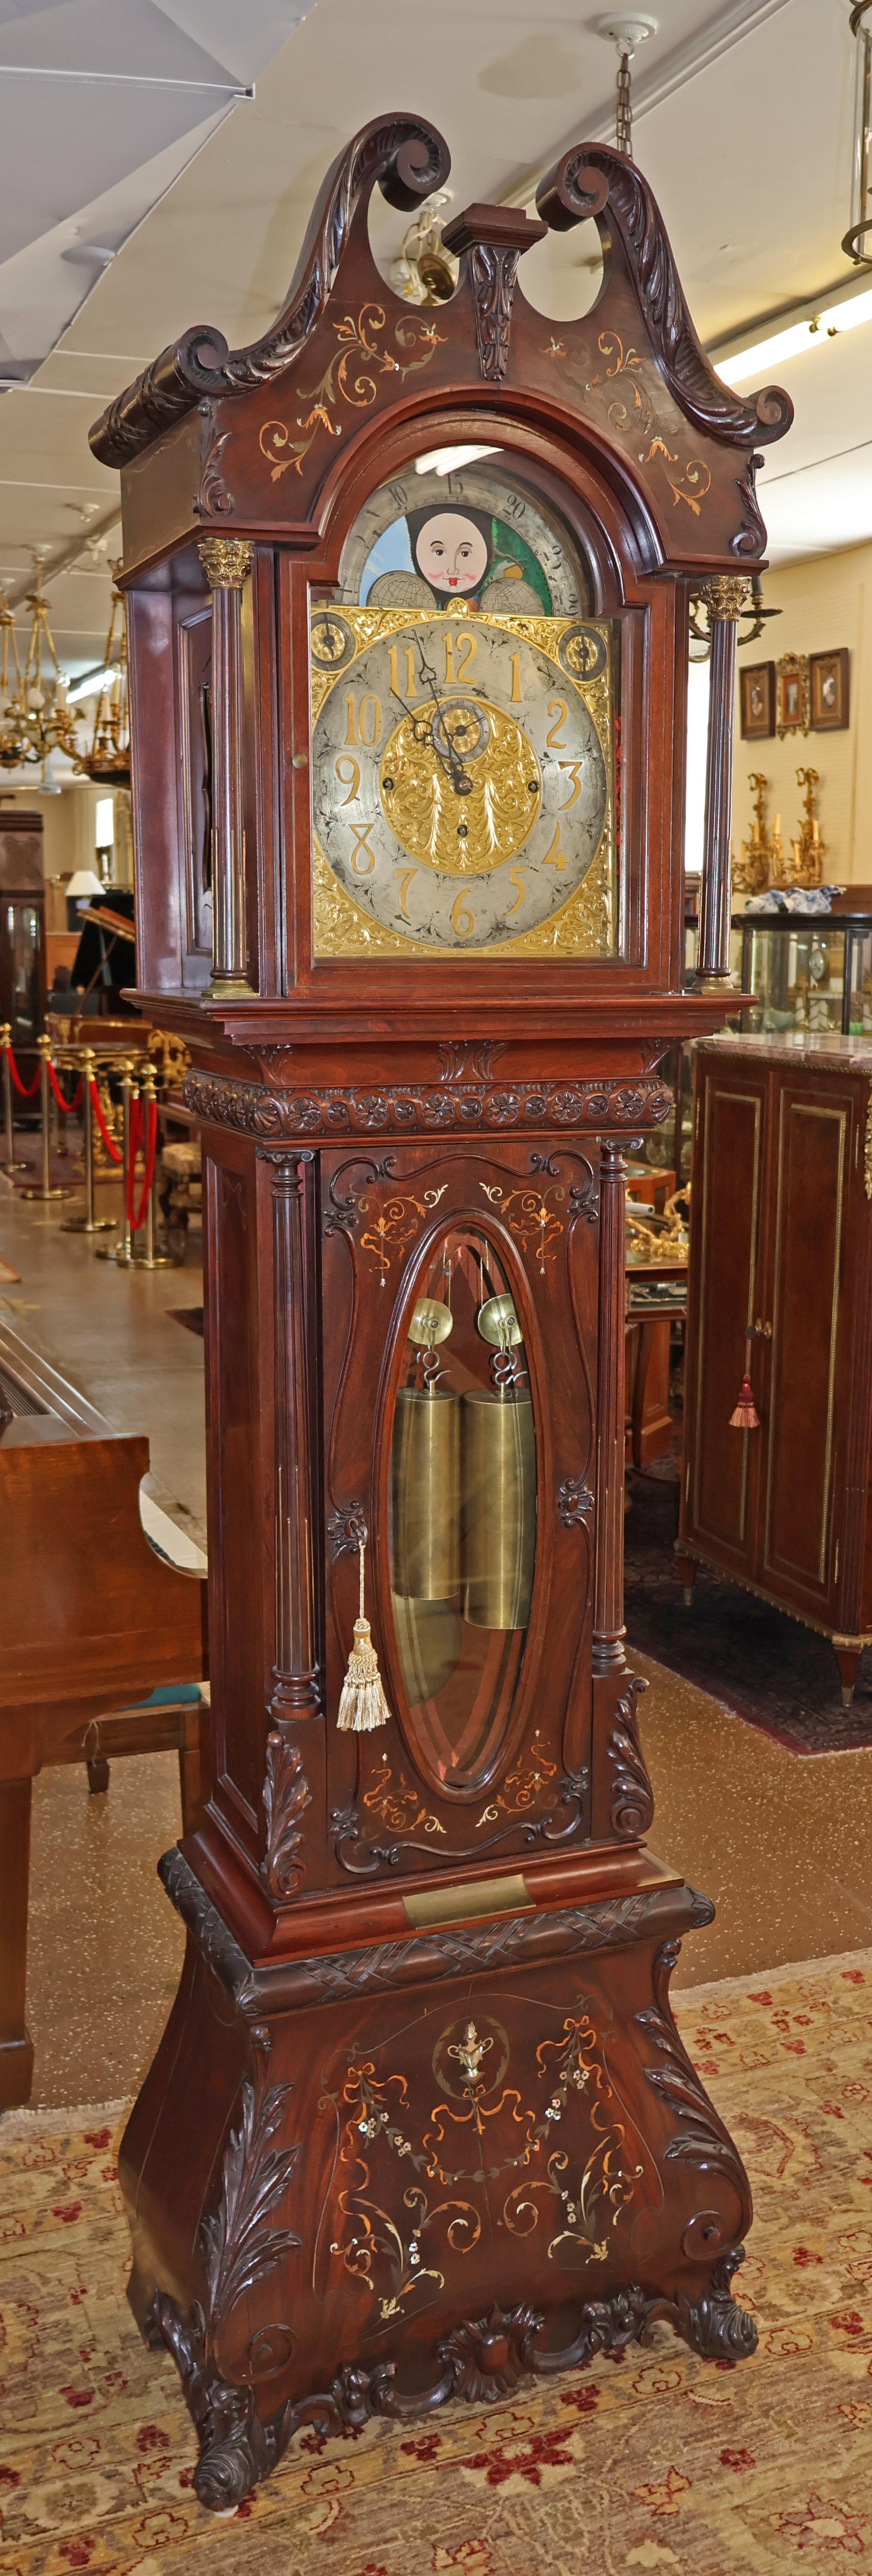 19th Century J.J Elliot Inlaid Brass Mahogany & Mother of Pearl Tall Case Clock

Dimensions : 91